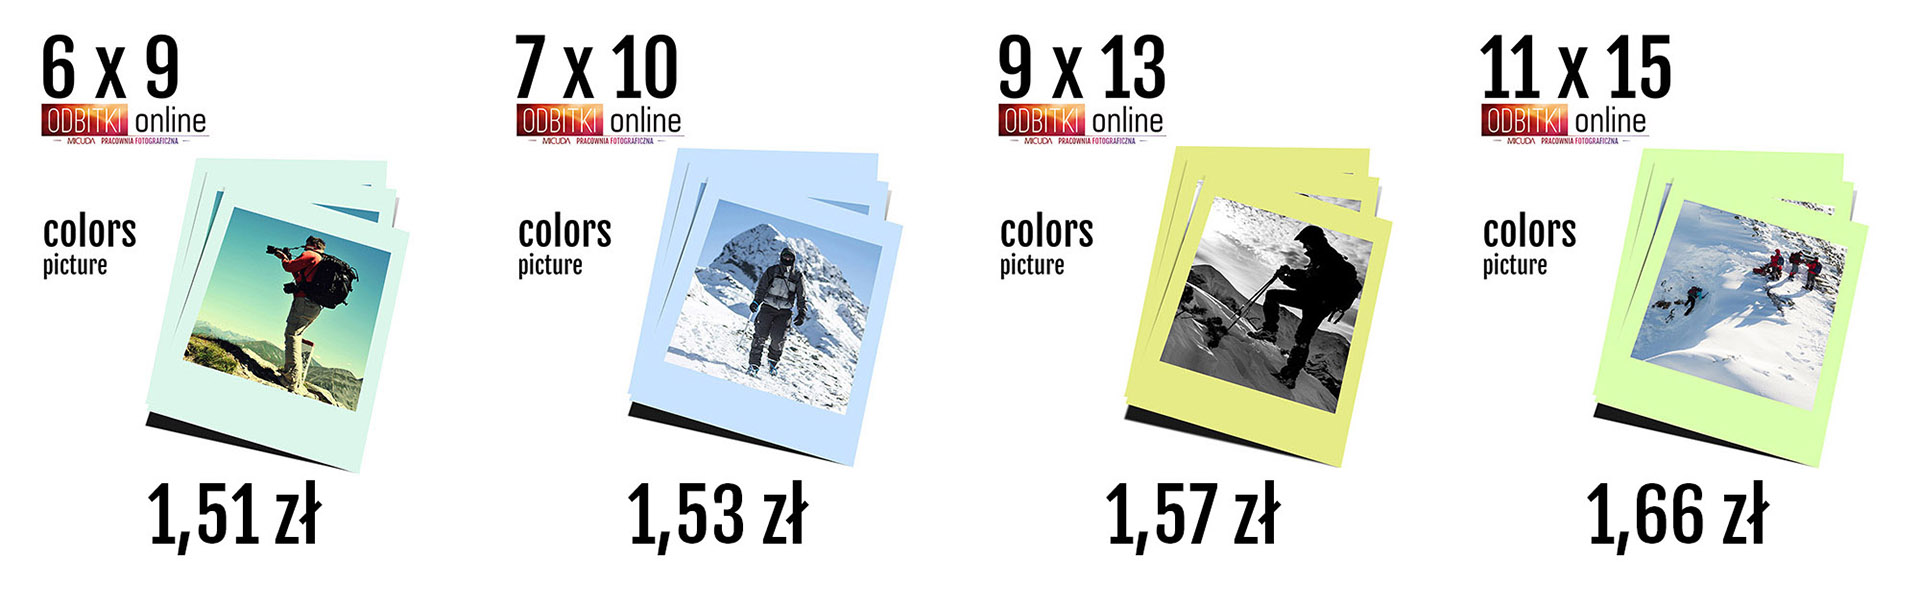 Odbitki Online Colors Picture - Pracownia Fotograficzna Micuda